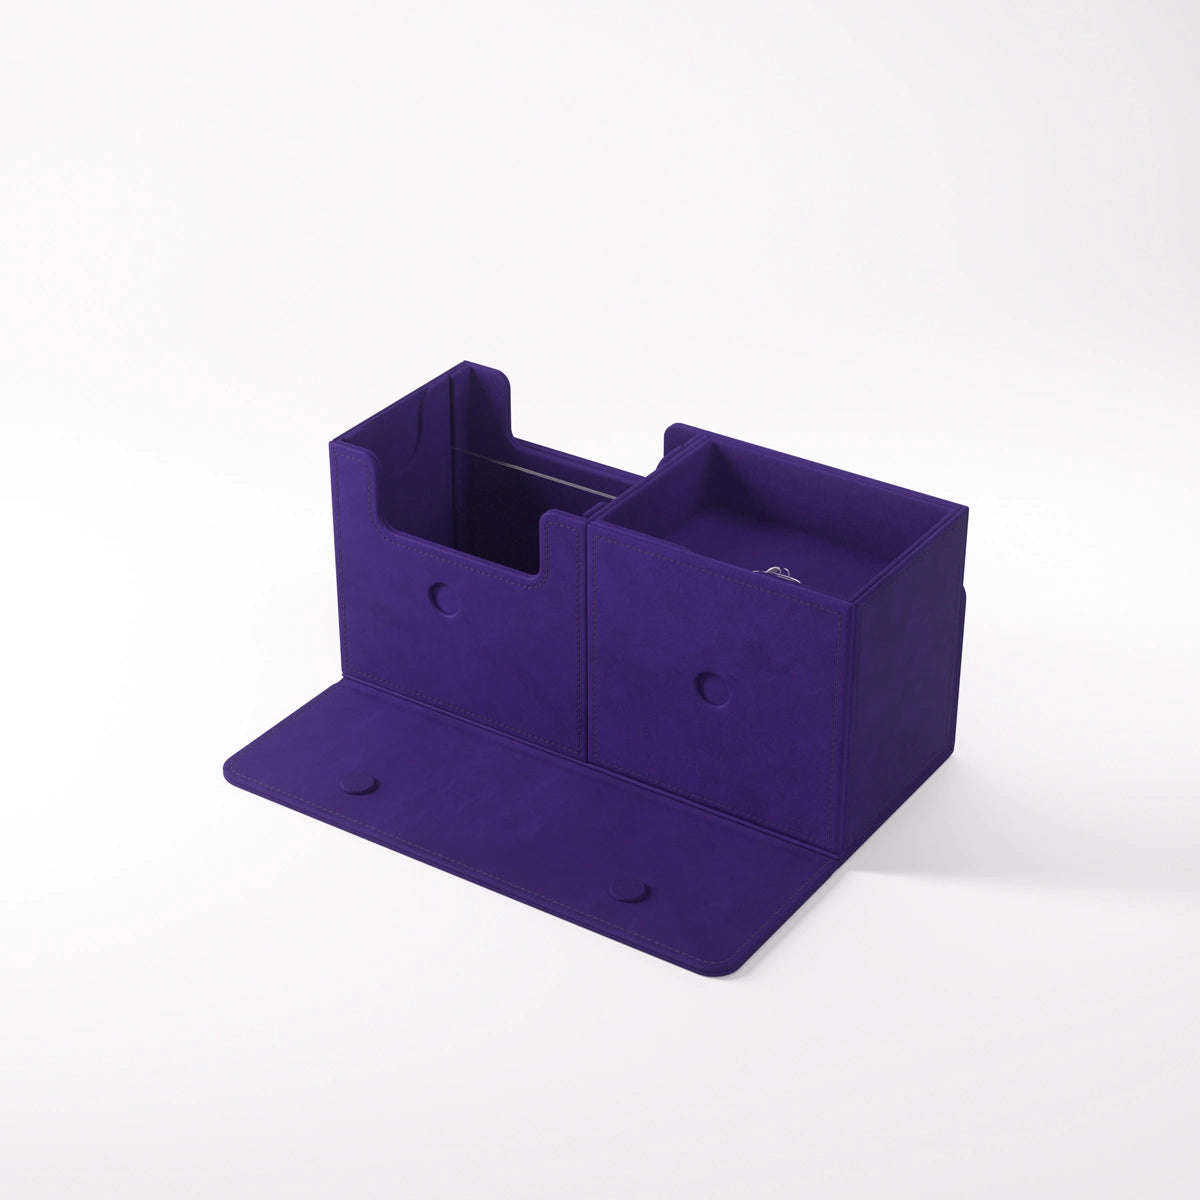 Deck Box: The Academic 133+ XL Purple/Purple Stealth Edition